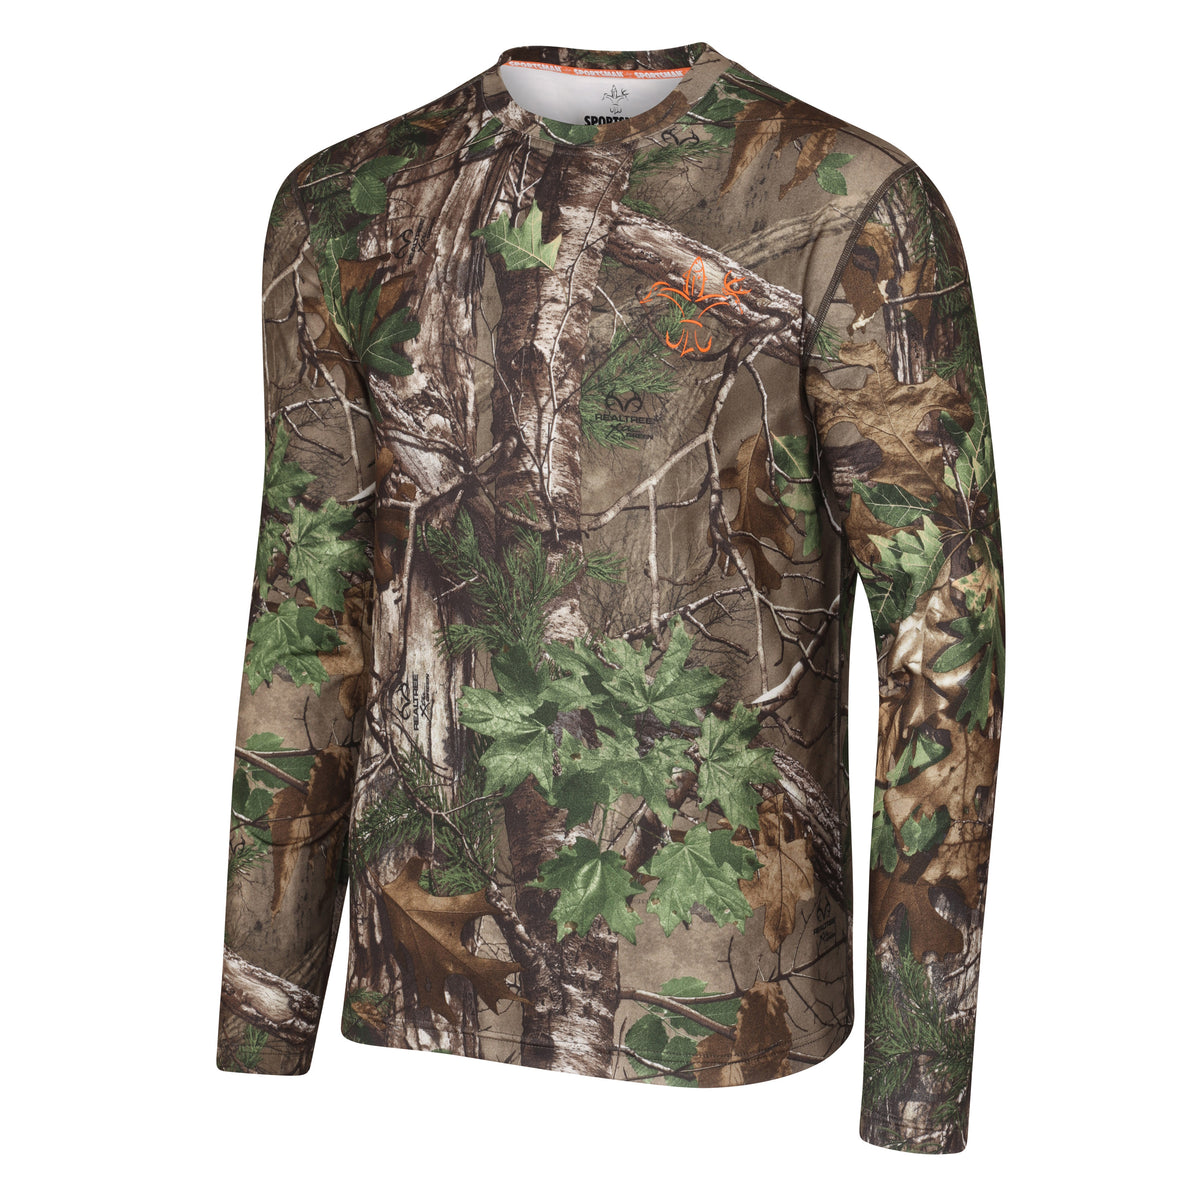 Sportsman Responder Xtra Green Camo Shirt, Long Sleeve Base Layer - woods deer hunting 